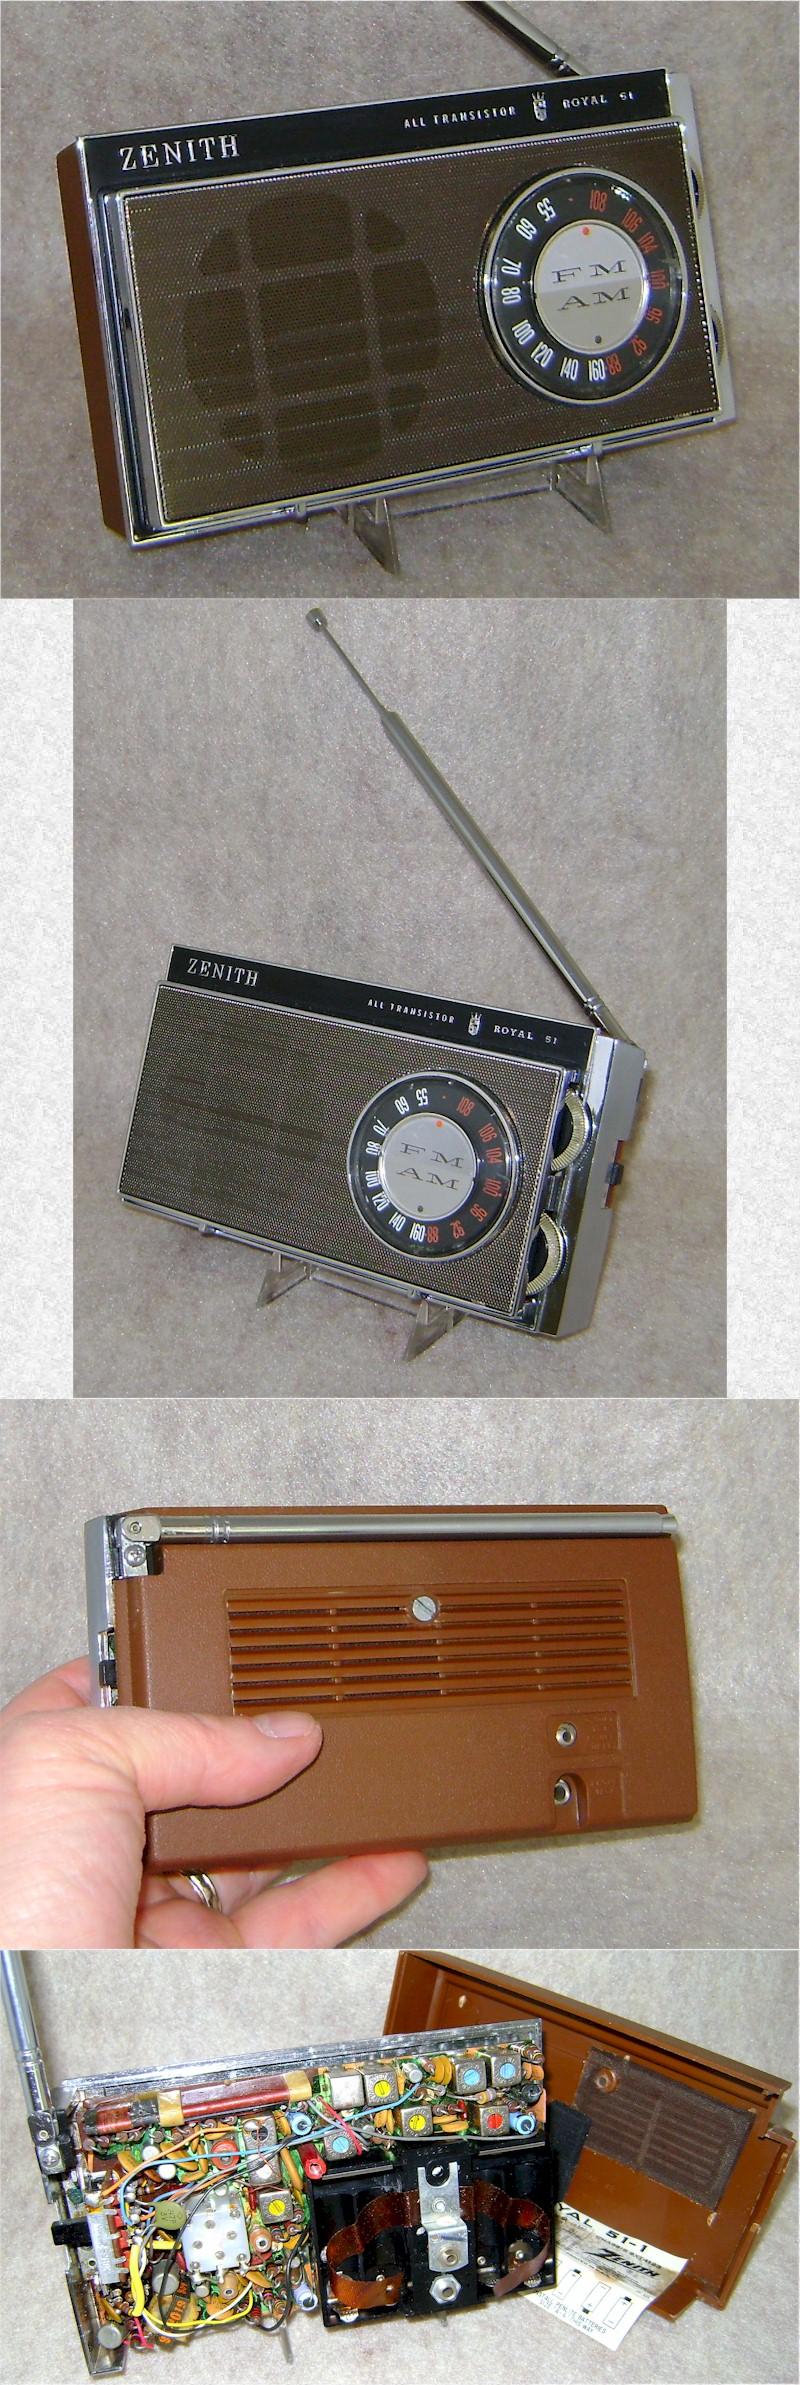 Zenith Royal 51 AM/FM Pocket Transistor